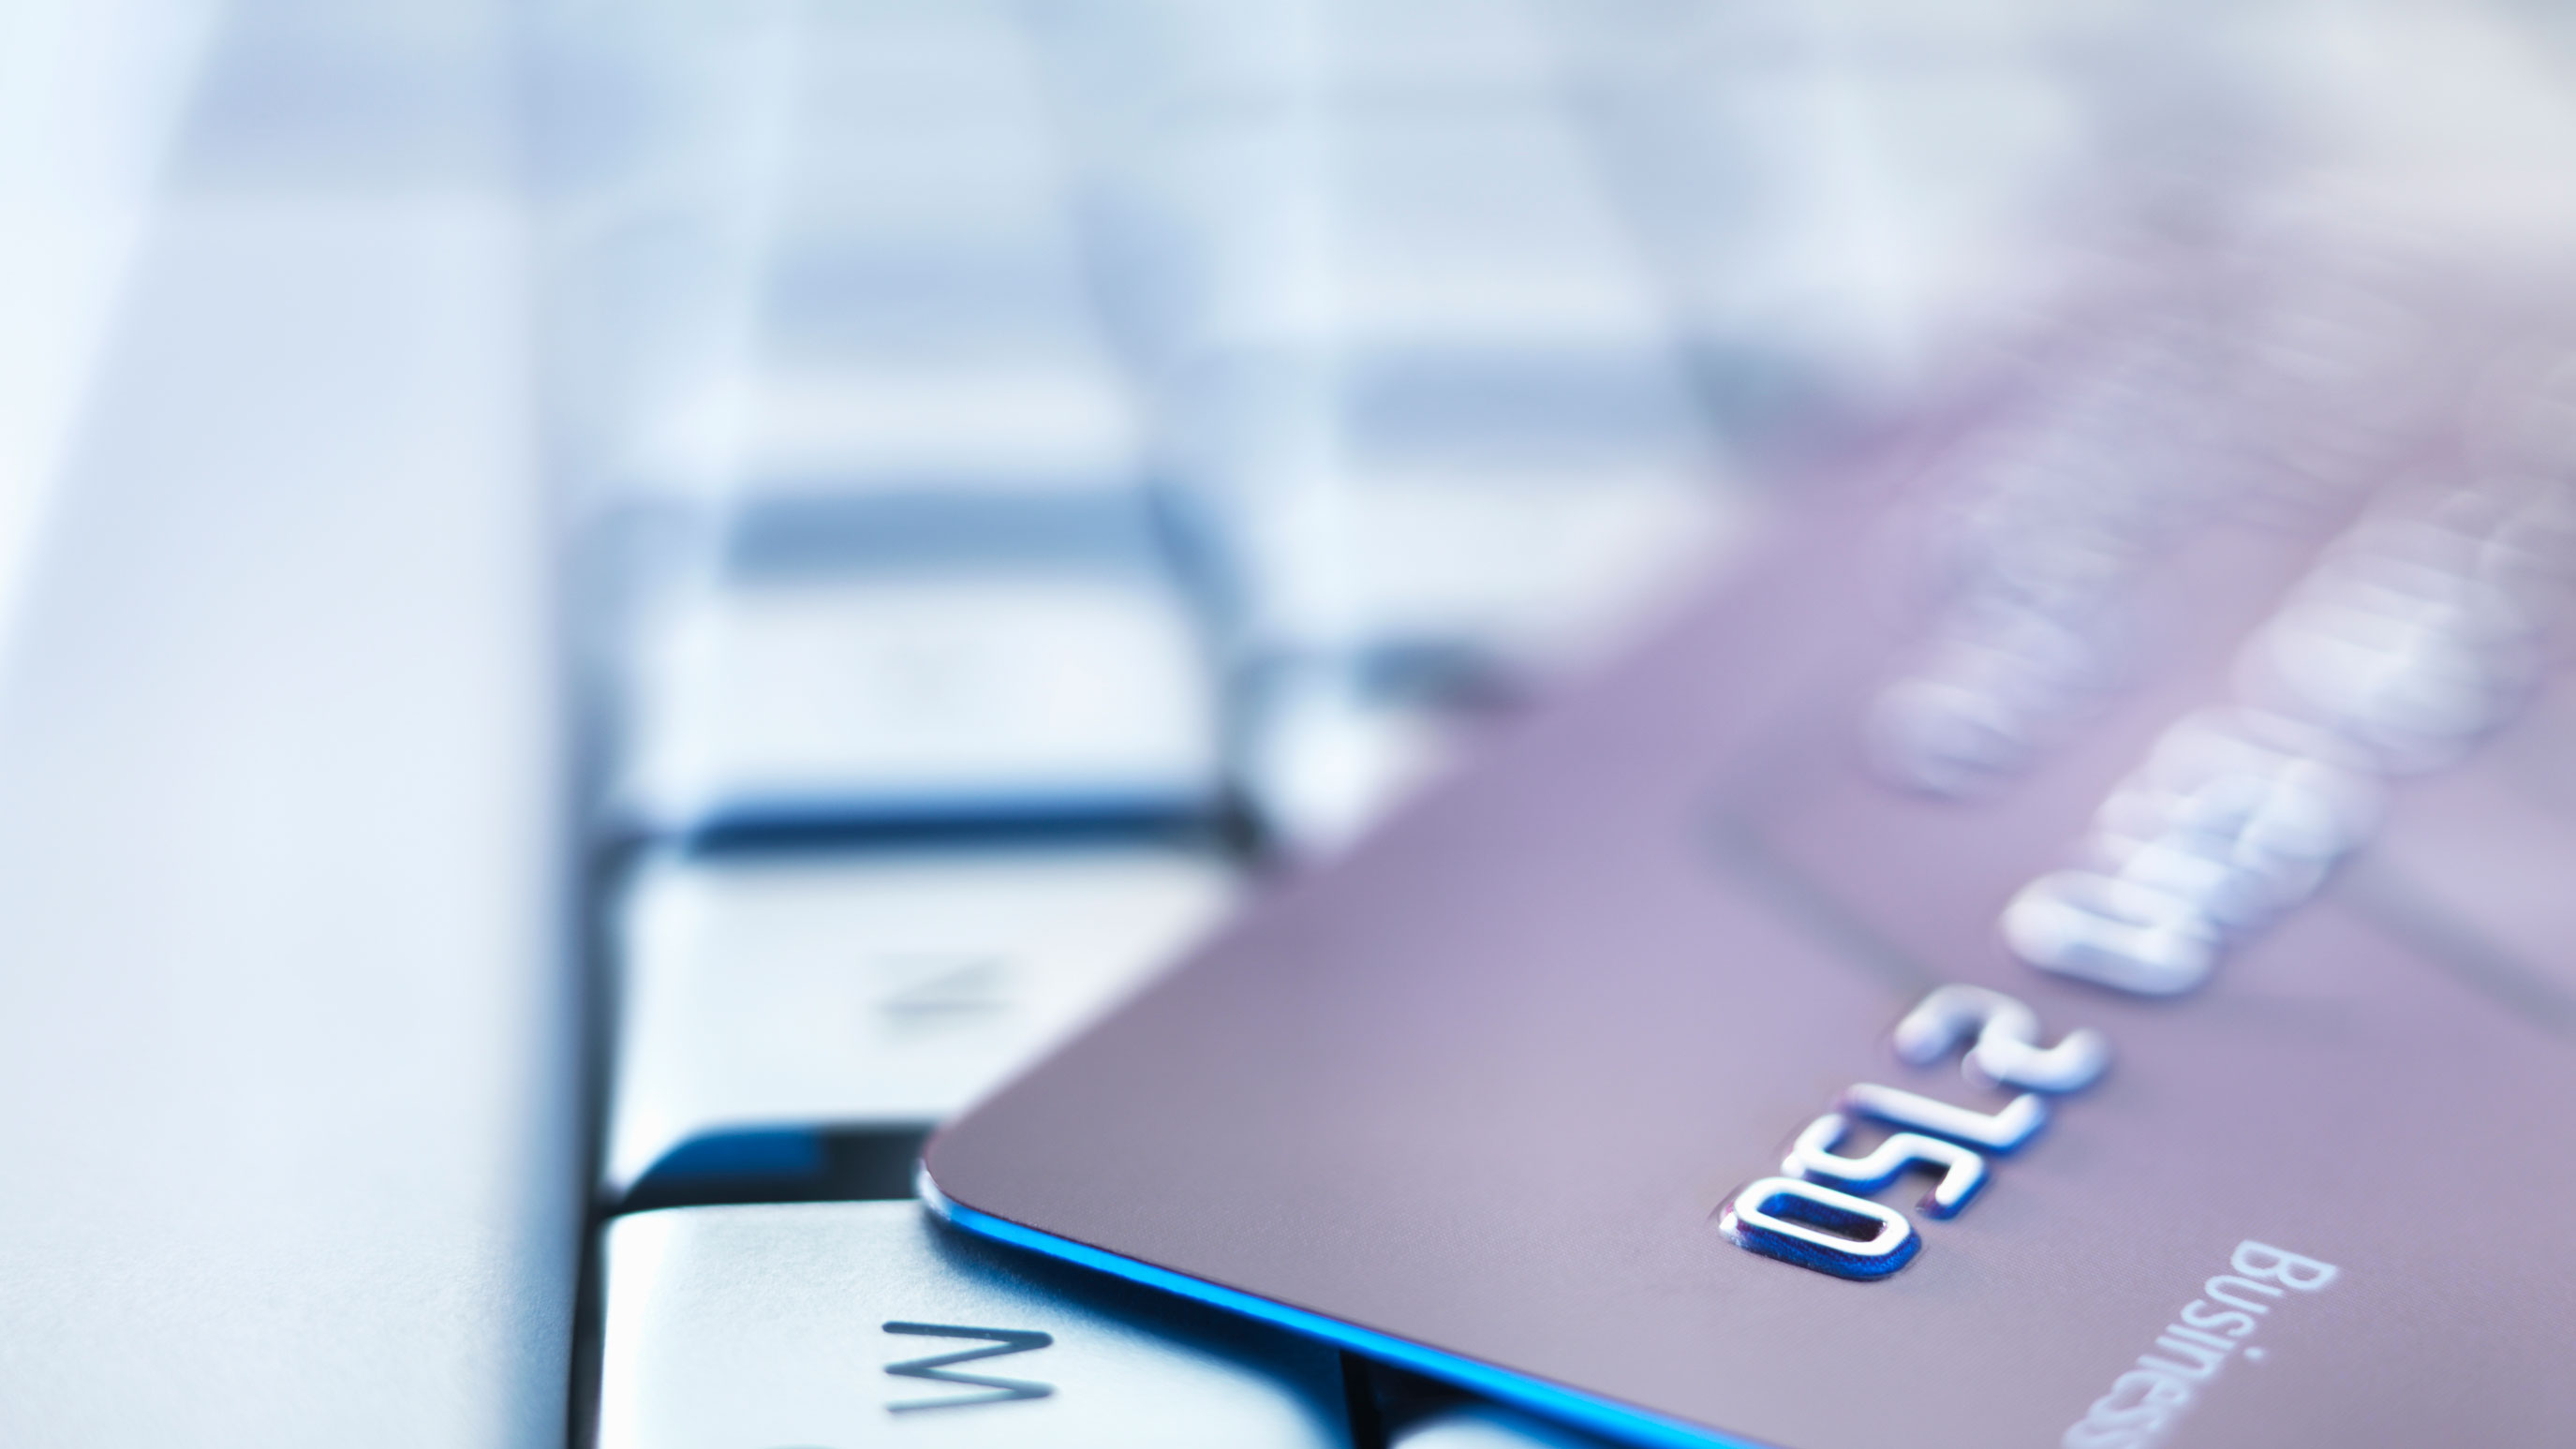 CashShield raises $5.5 million to prevent credit card fraud